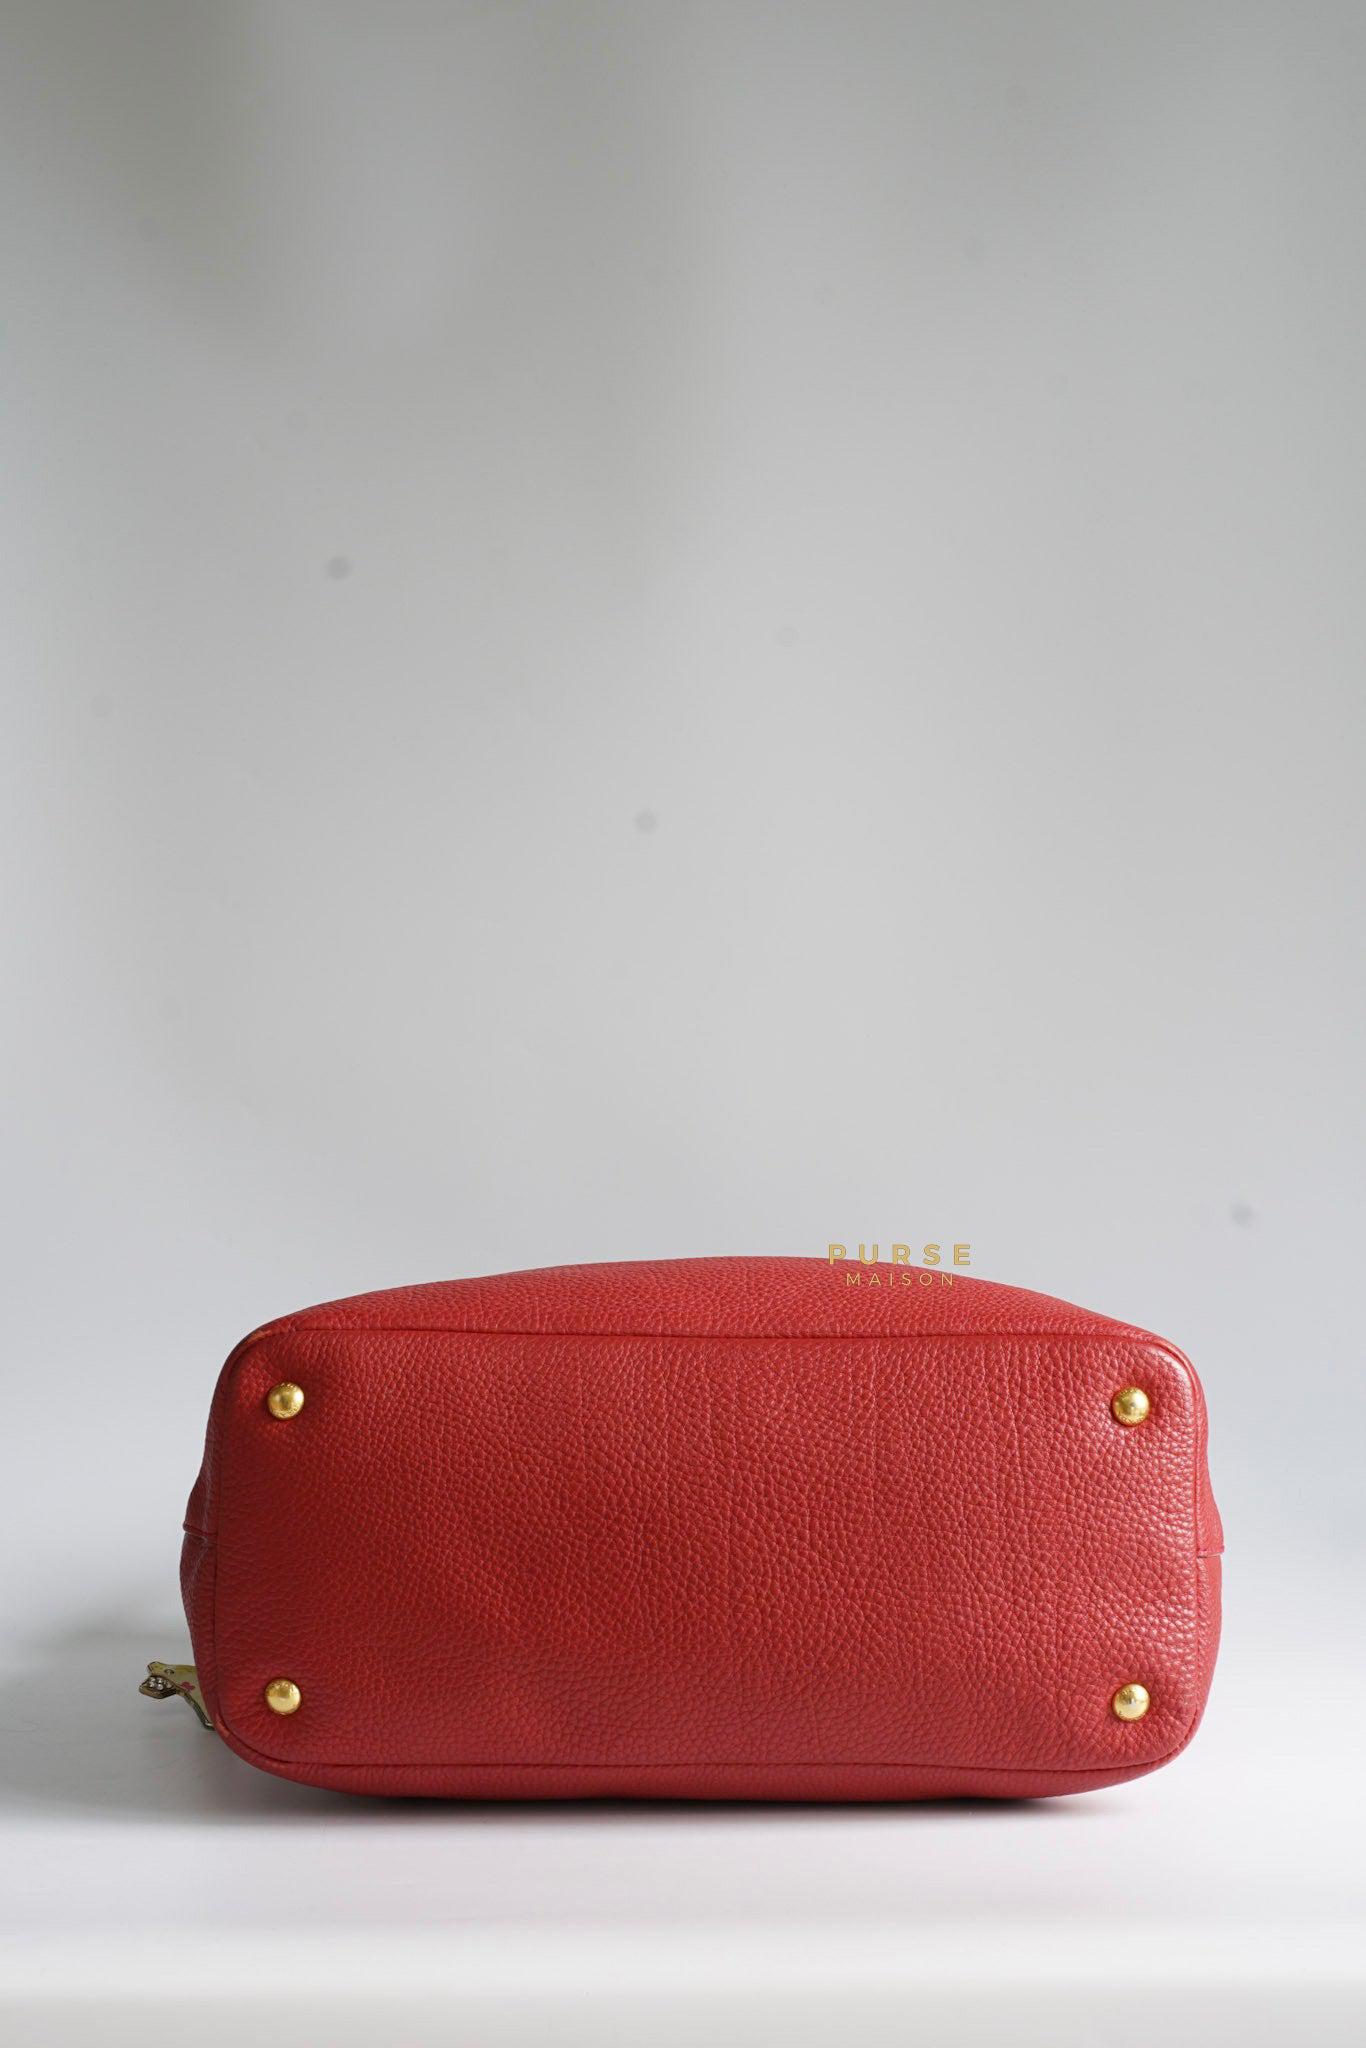 Prada BN2317 Vitello Daino Rosso Leather Tote Bag